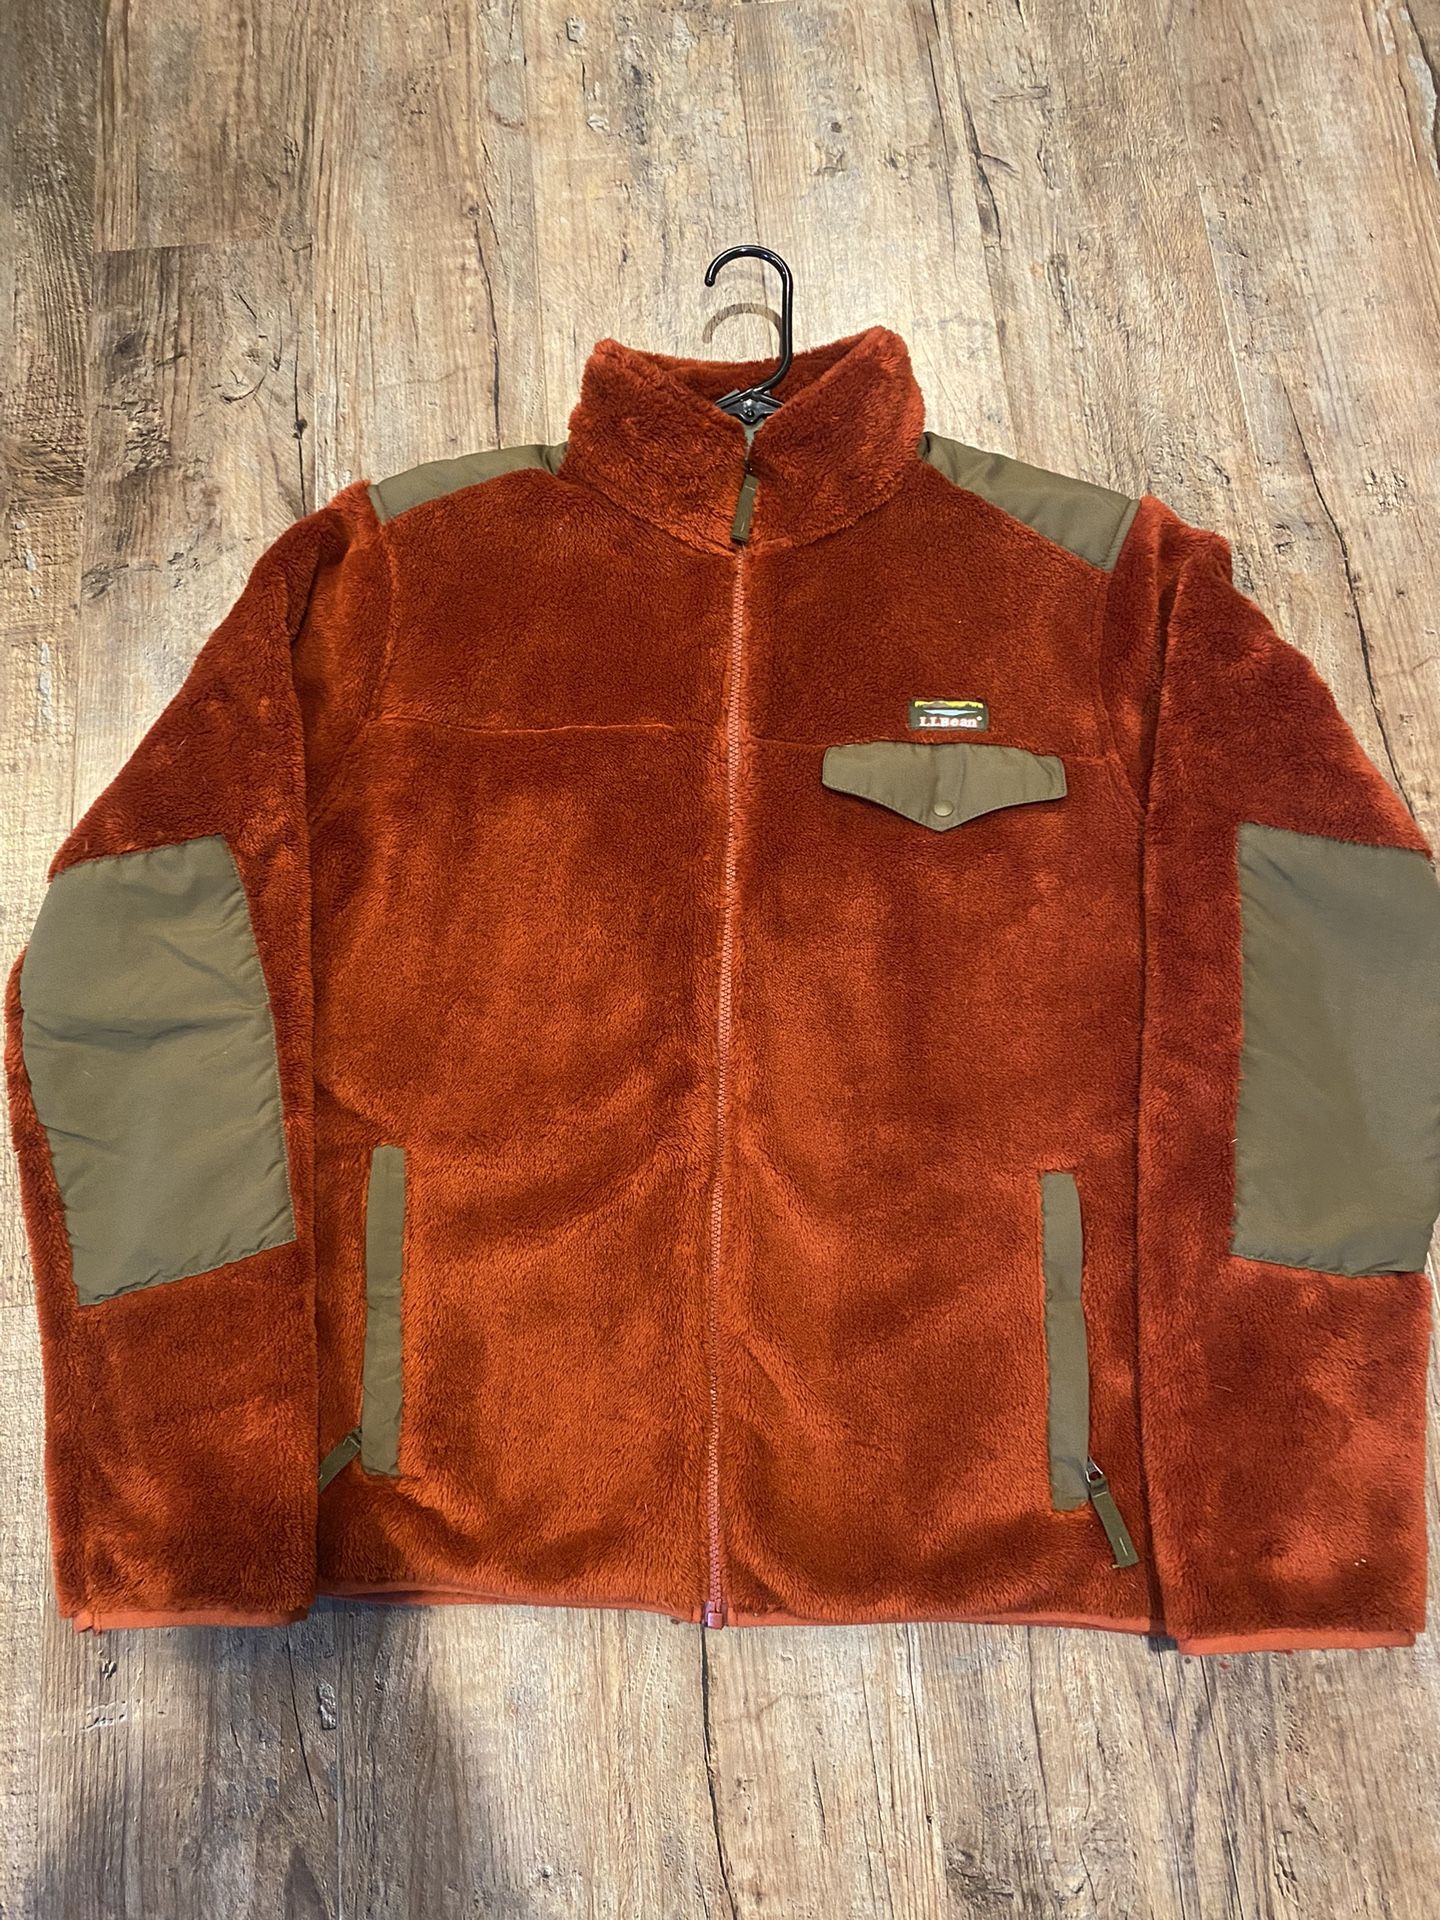 Men’s LL Bean Hi-pile Fleece Jacket Size Large